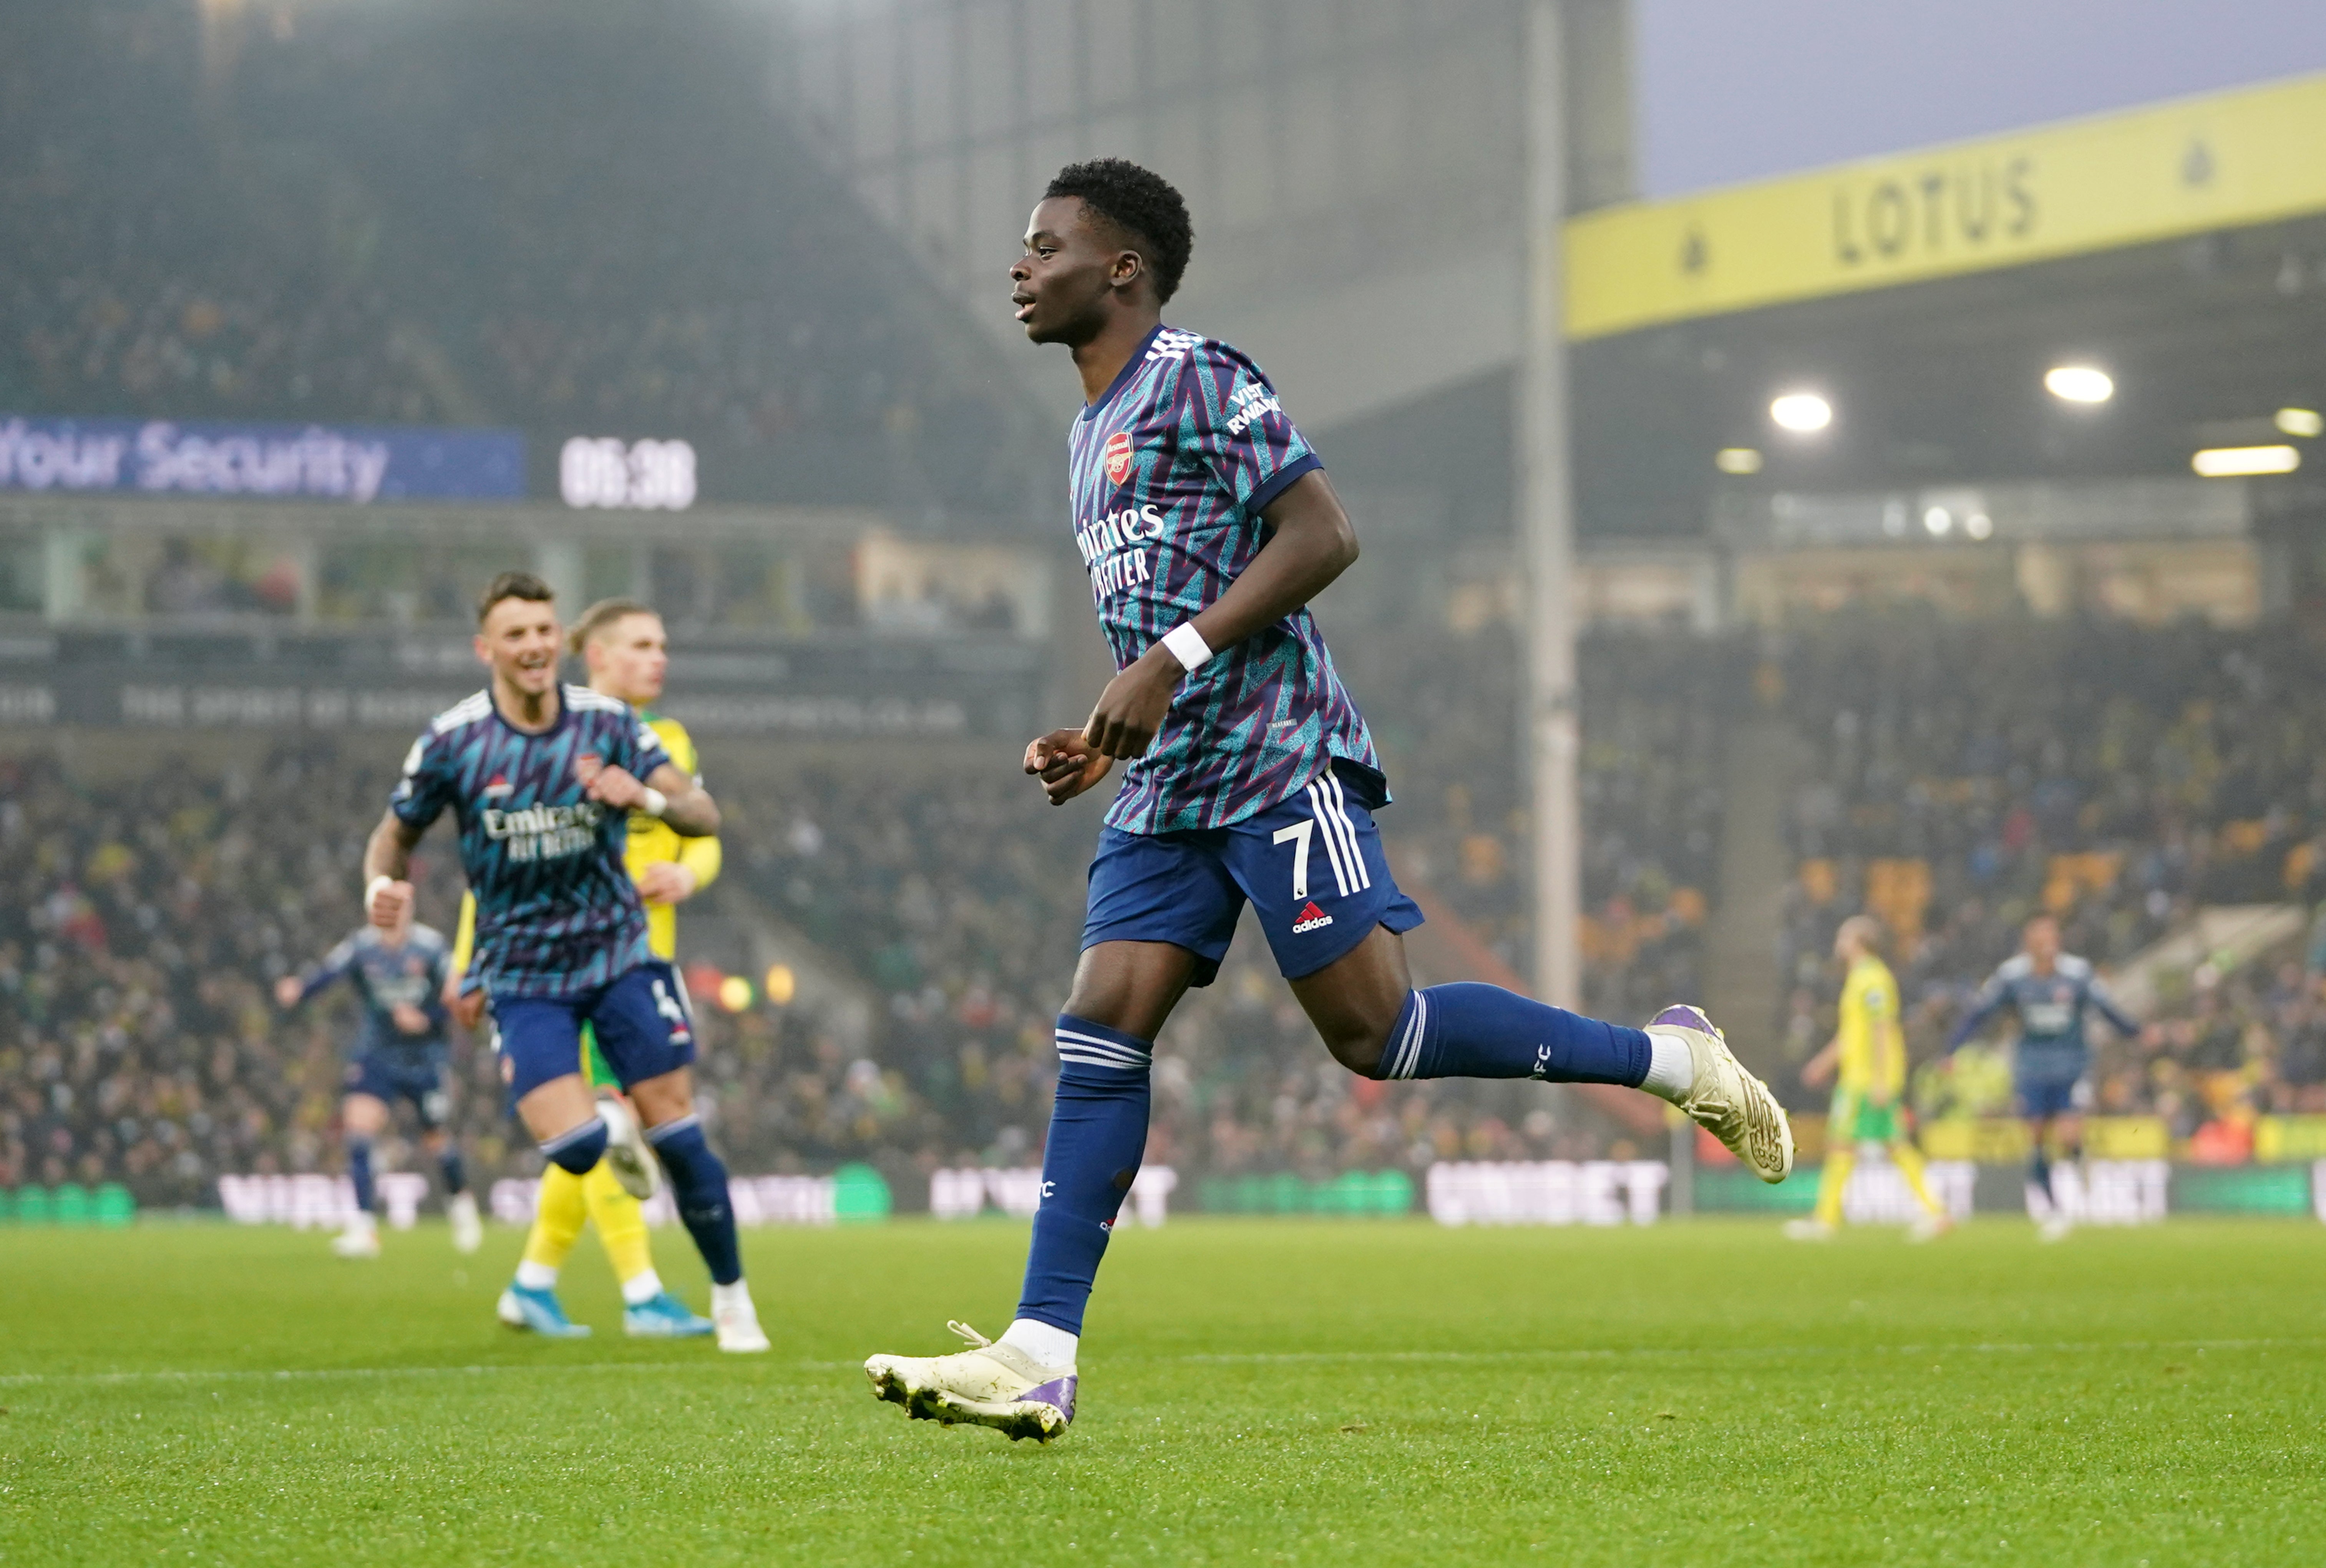 After a goal against Leeds last week, Bukayo Saka showed he’s a man in form